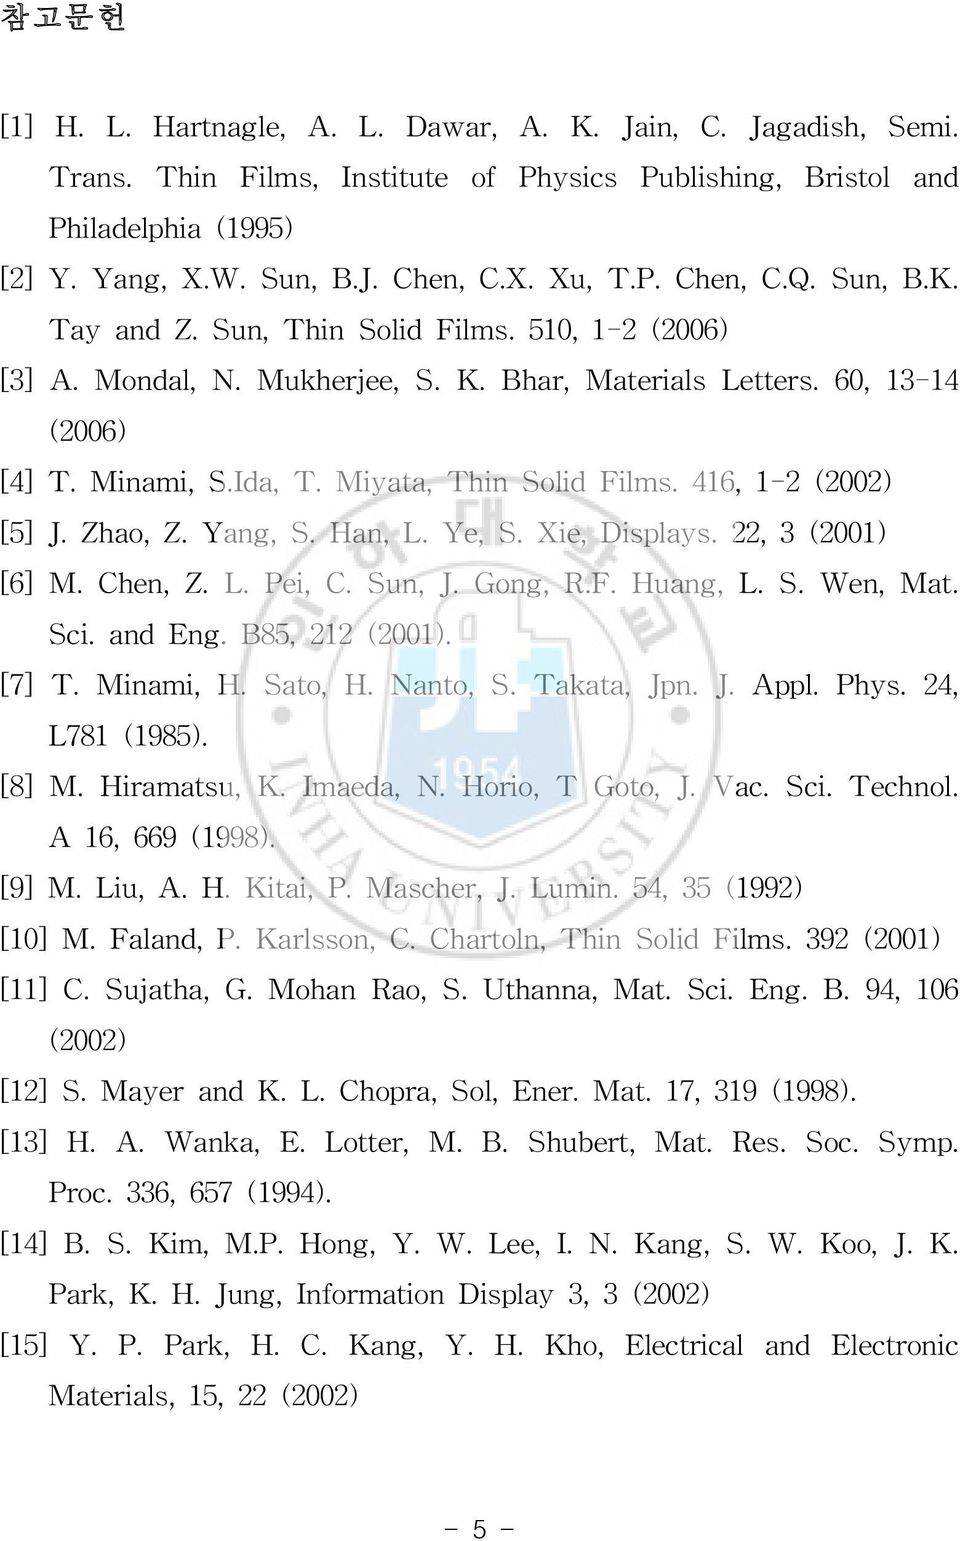 Miyata, Thin Solid Films. 416, 1-2 (2002) [5] J. Zhao, Z. Yang, S. Han, L. Ye, S. Xie, Displays. 22, 3 (2001) [6] M. Chen, Z. L. Pei, C. Sun, J. Gong, R.F. Huang, L. S. Wen, Mat. Sci. and Eng.